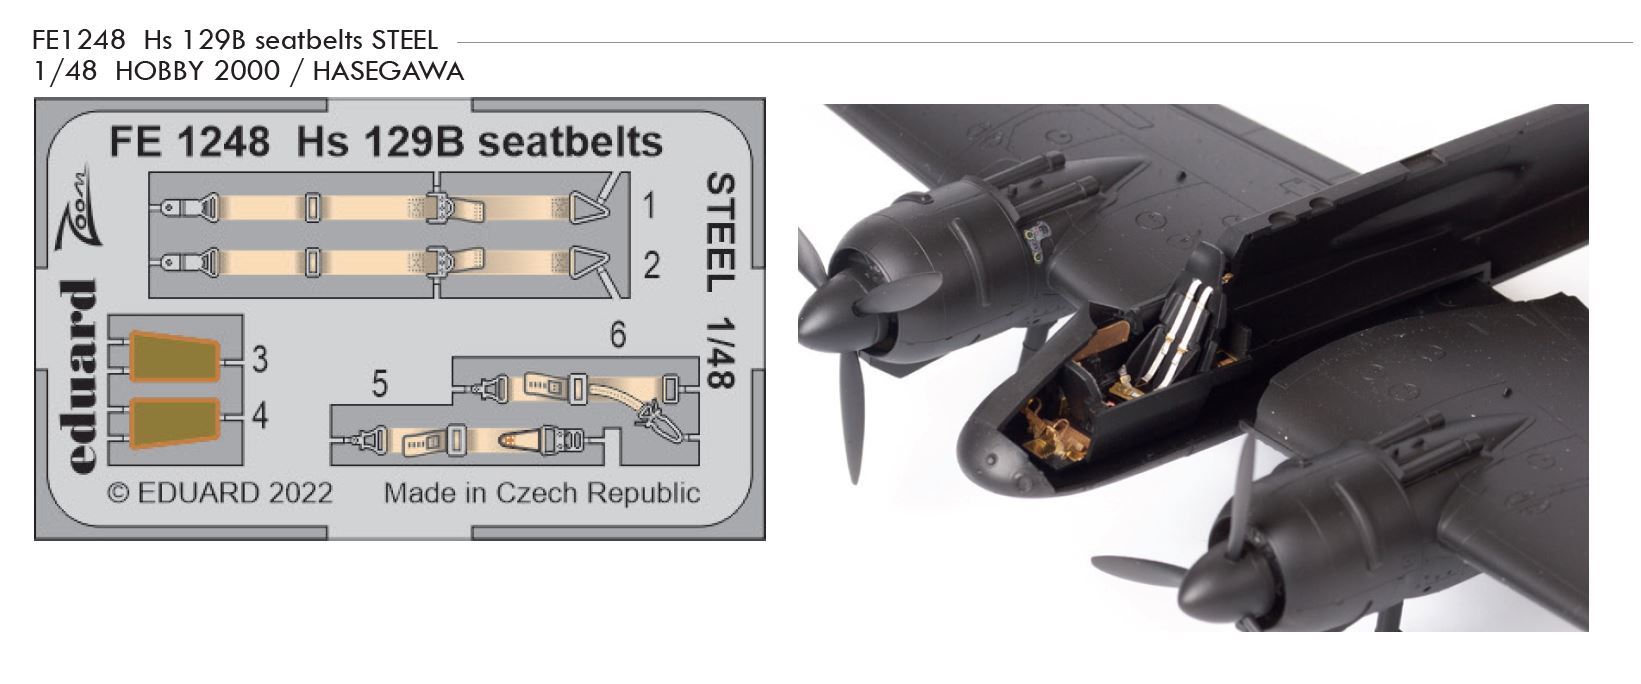 1/48 Hs 129B seatbelts STEEL (HOBBY 2000/HASEGAWA)